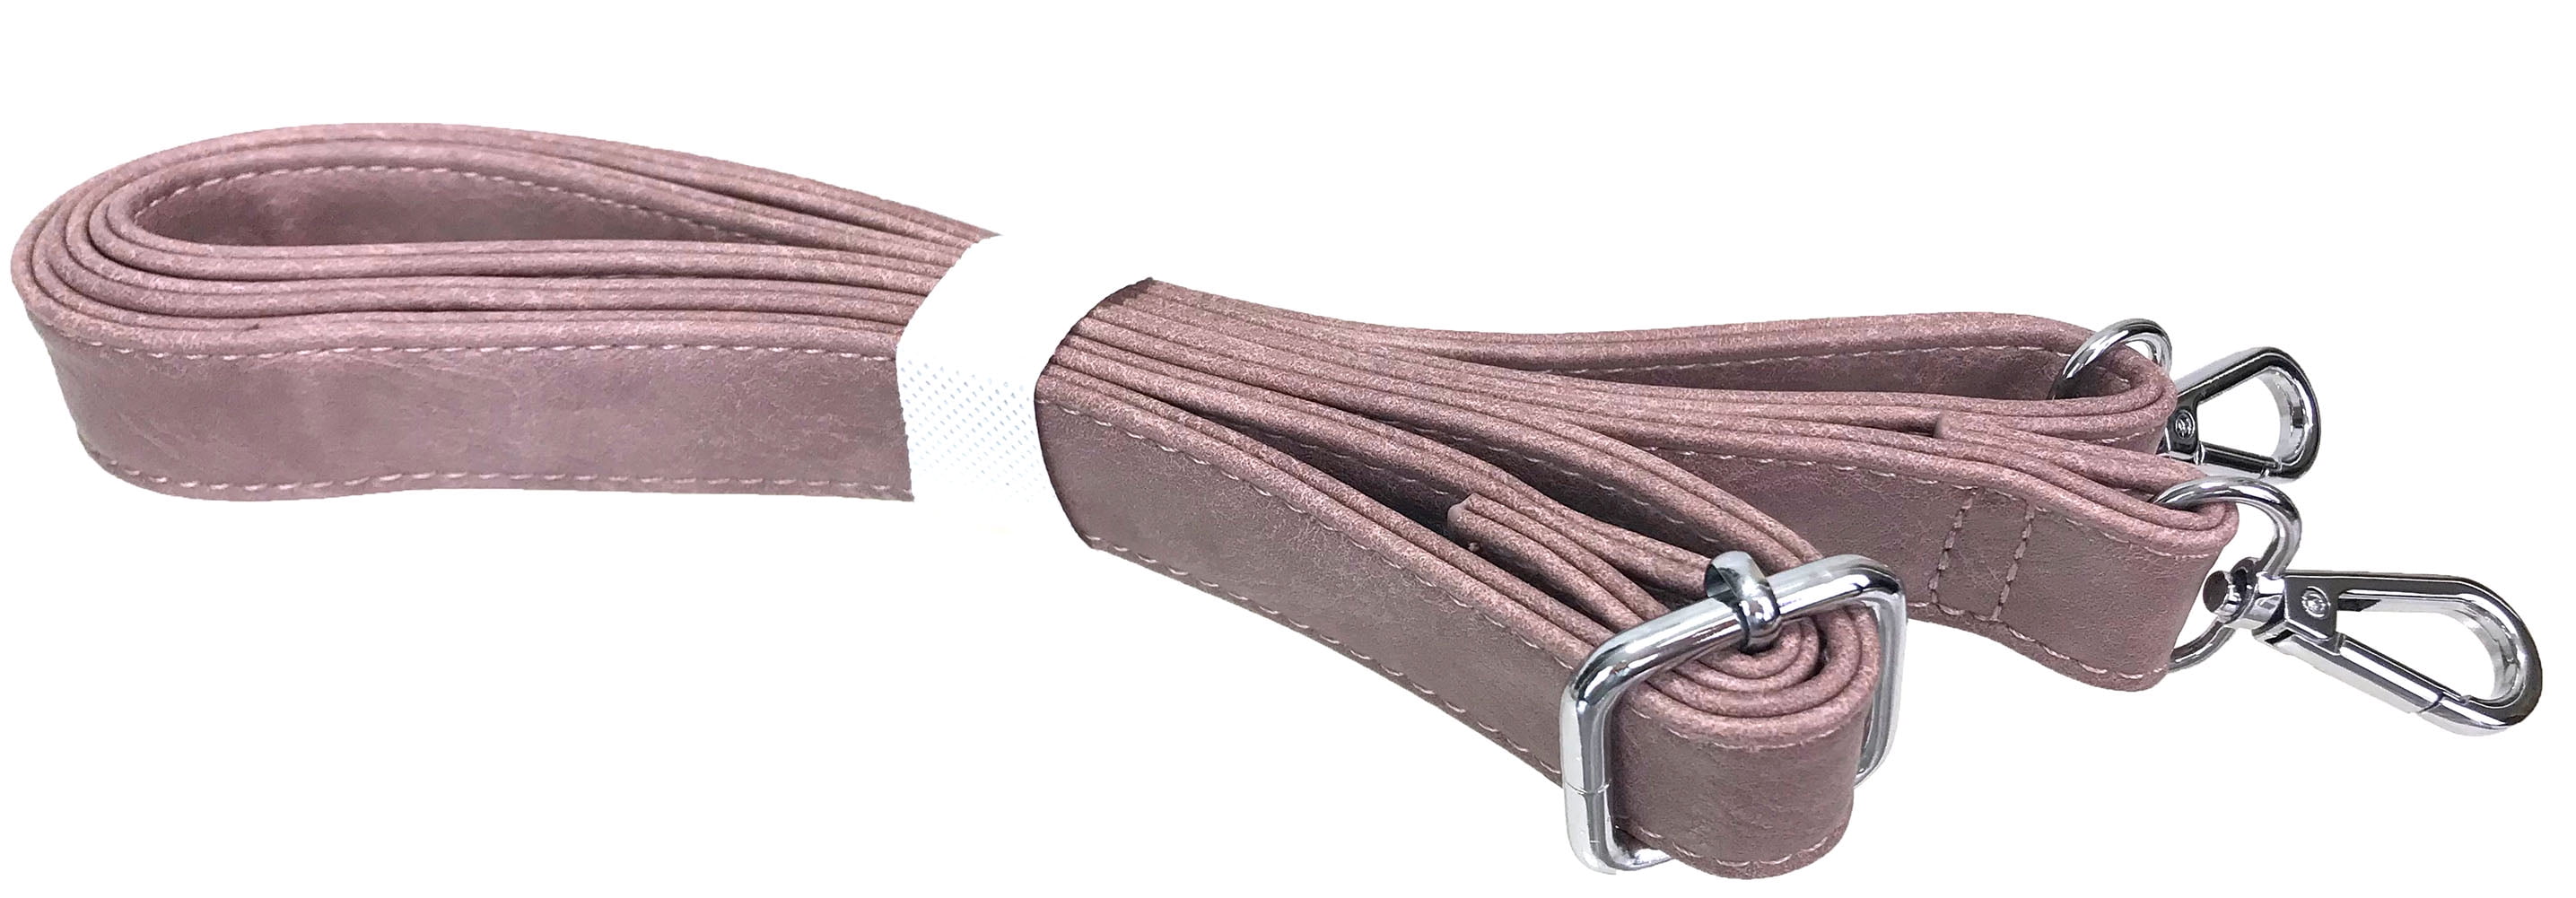 zfab Faux Leather Purse Strap Adjustable Replacement Shoulder Strap Pewter  